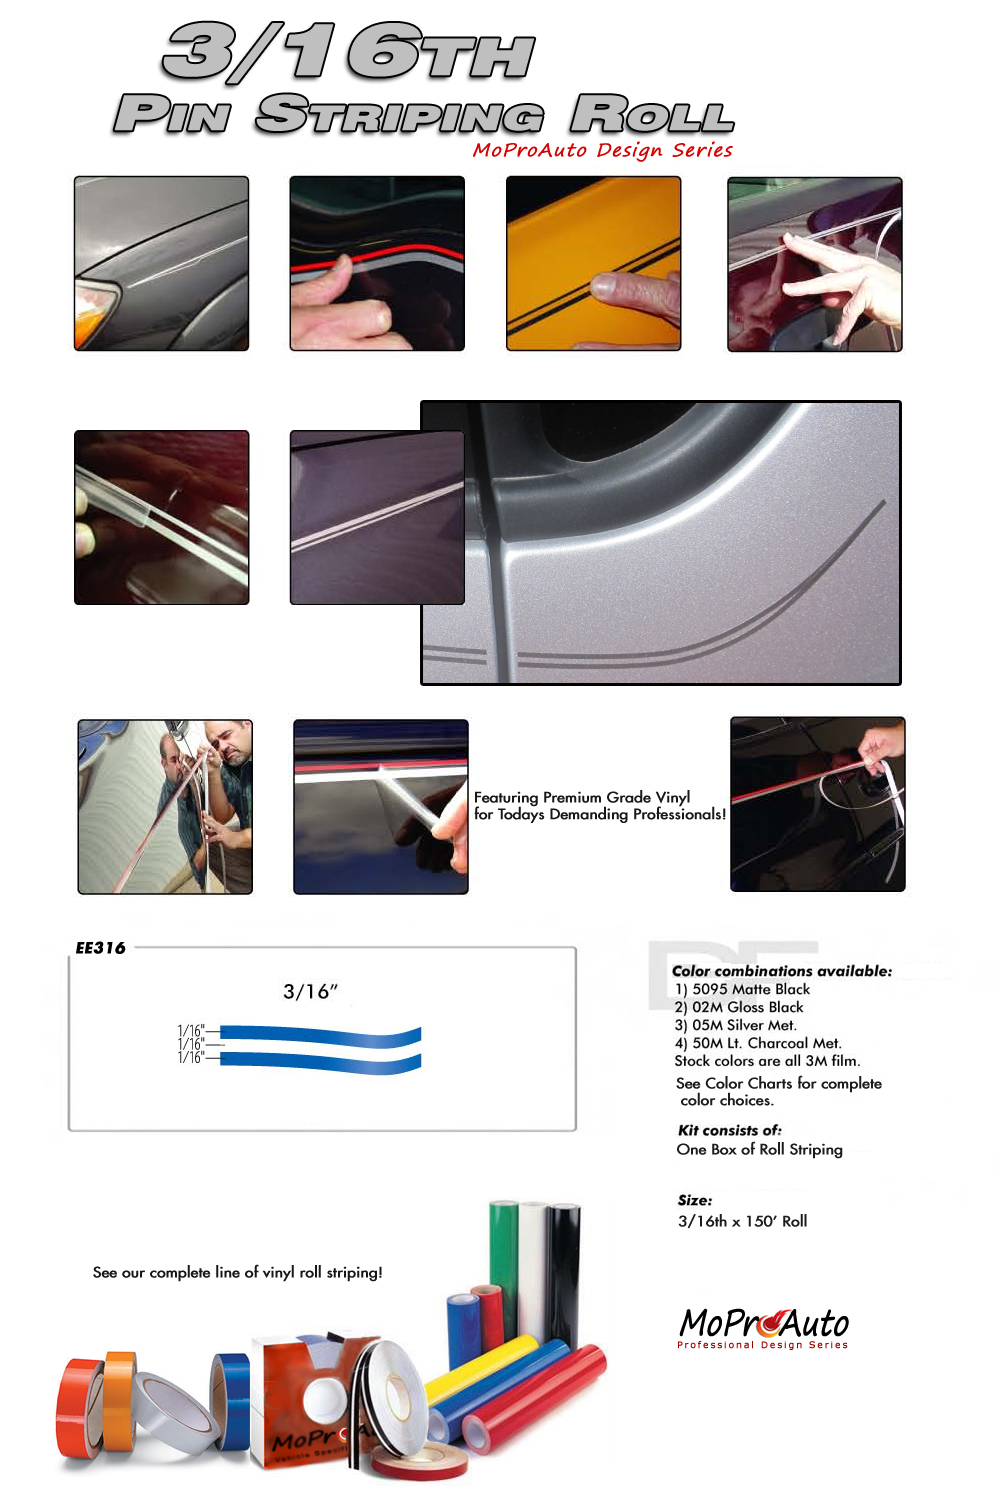 Professional Vinyl Pin Striping Rolls